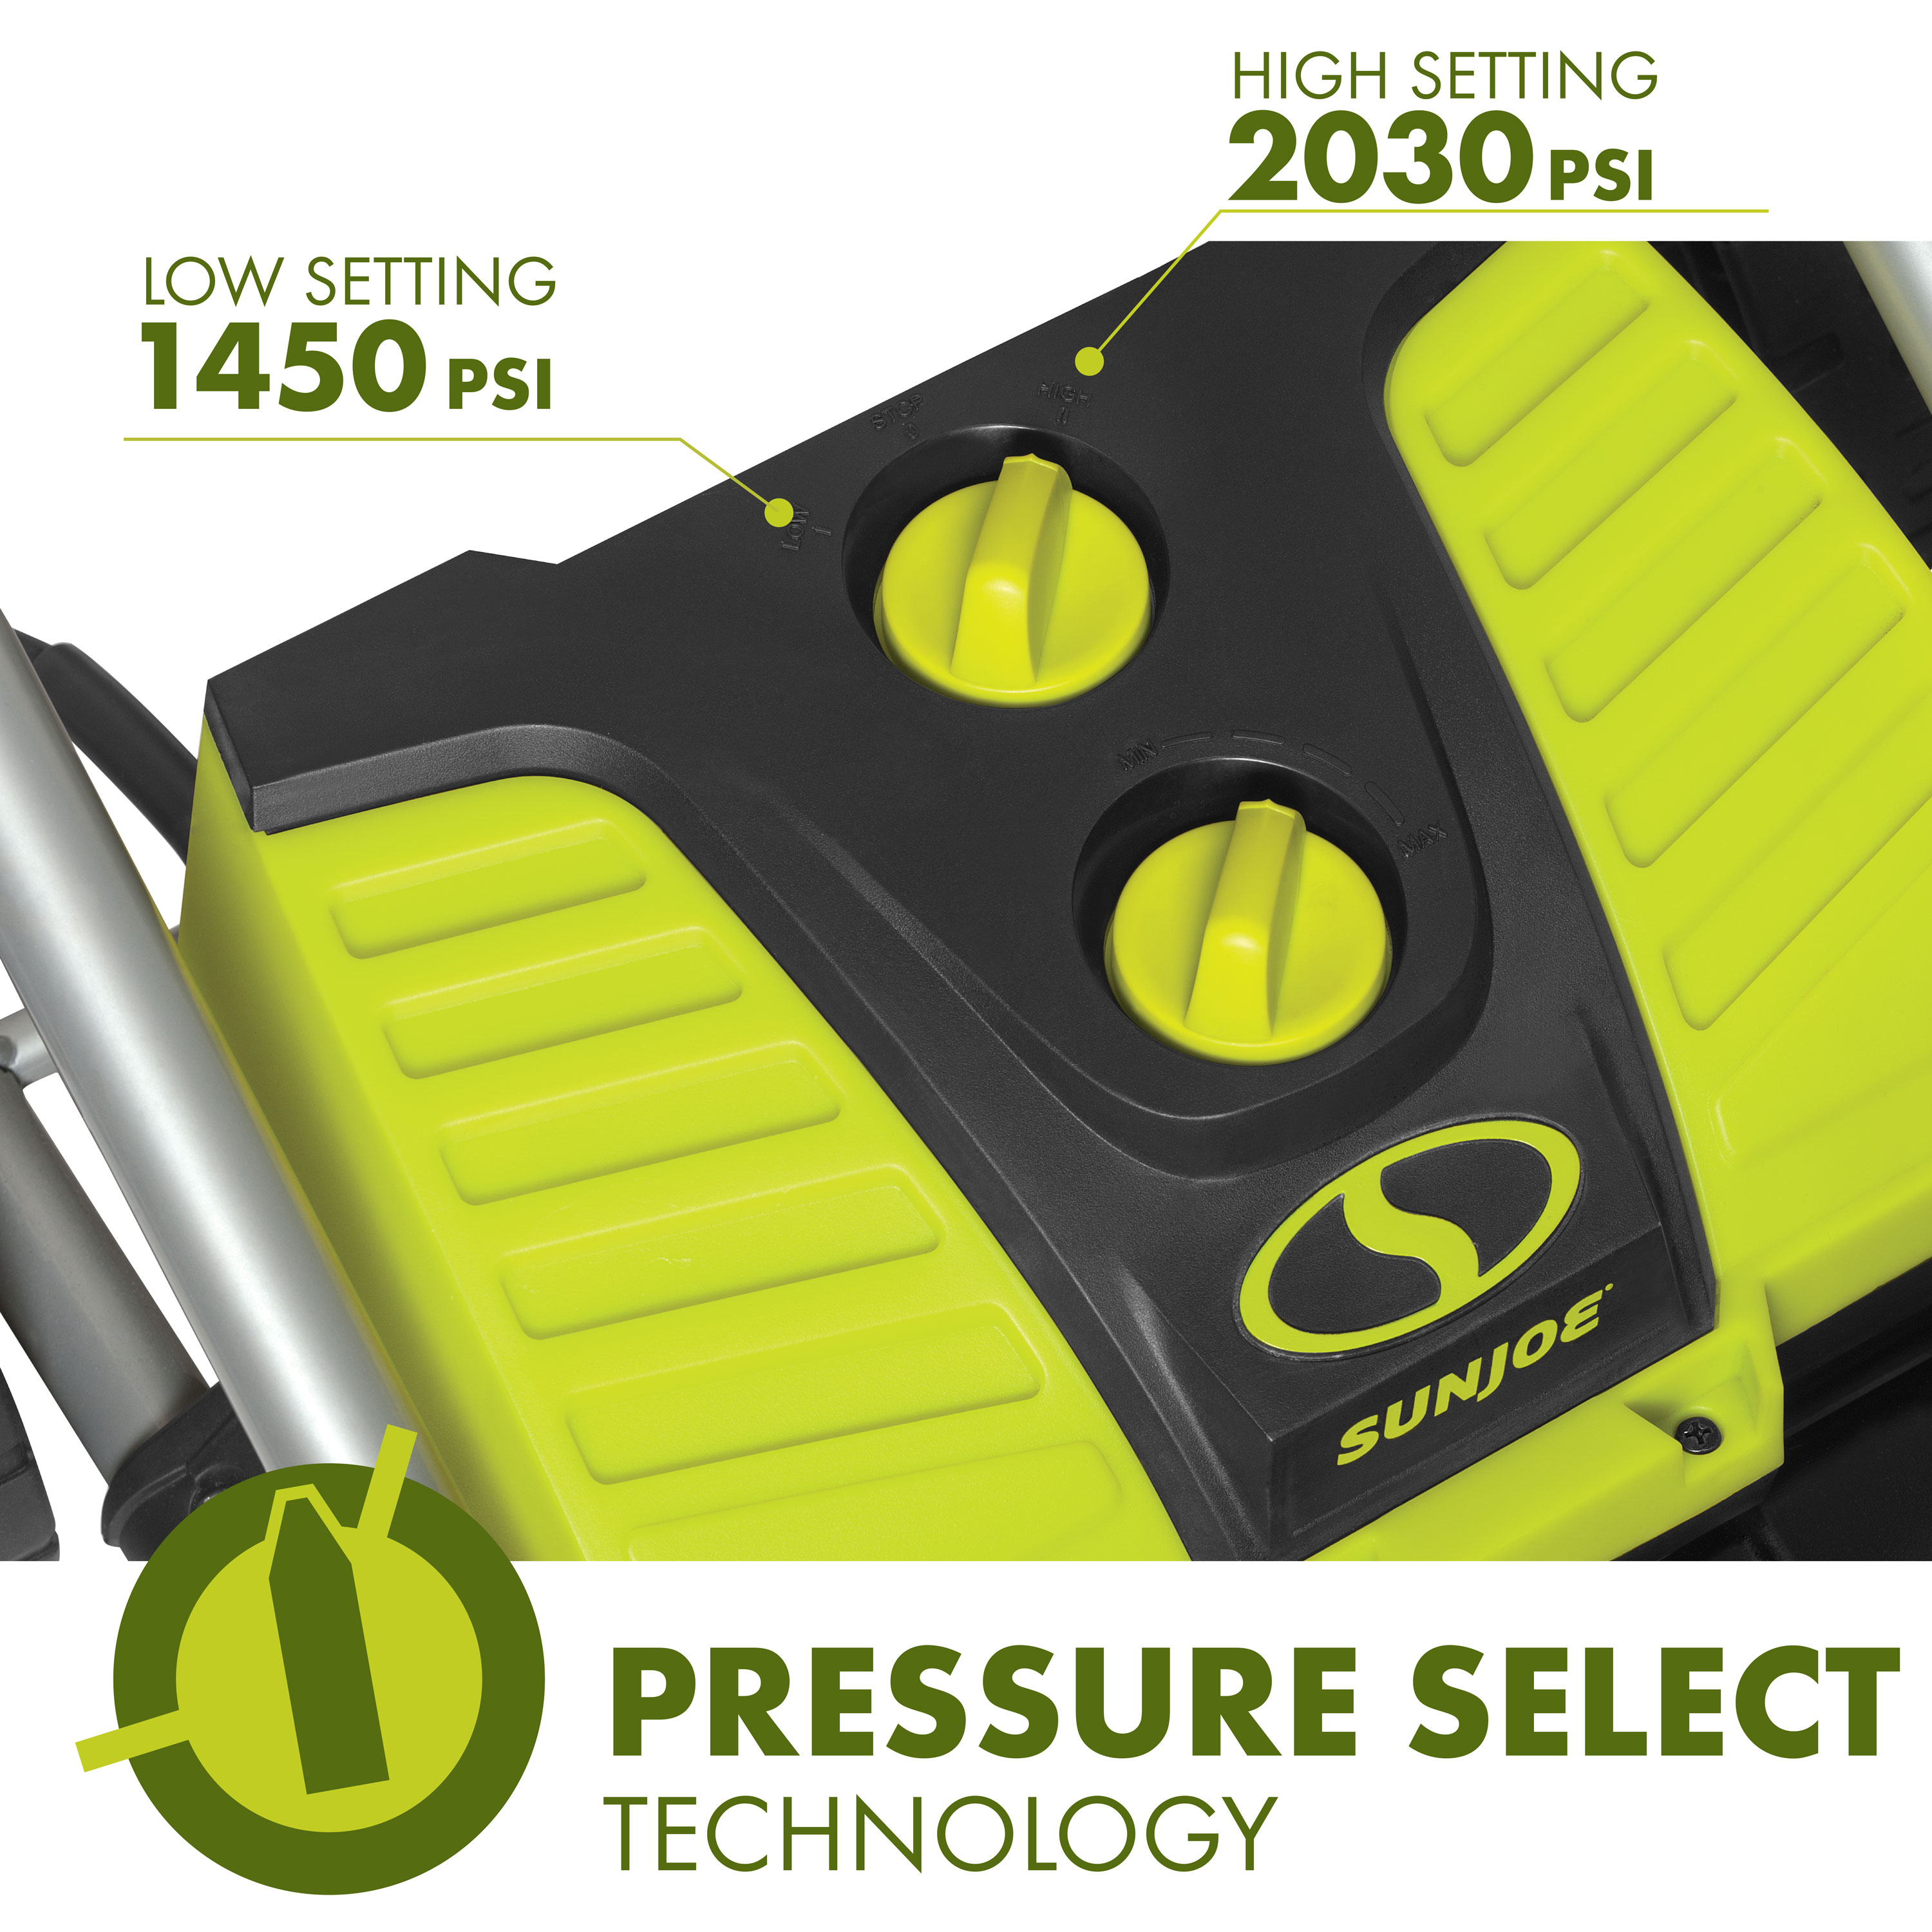 Sun Joe Electric Pressure Washer W/ Hose Reel, 14.5-Amp, Pressure Select Technology - image 3 of 16